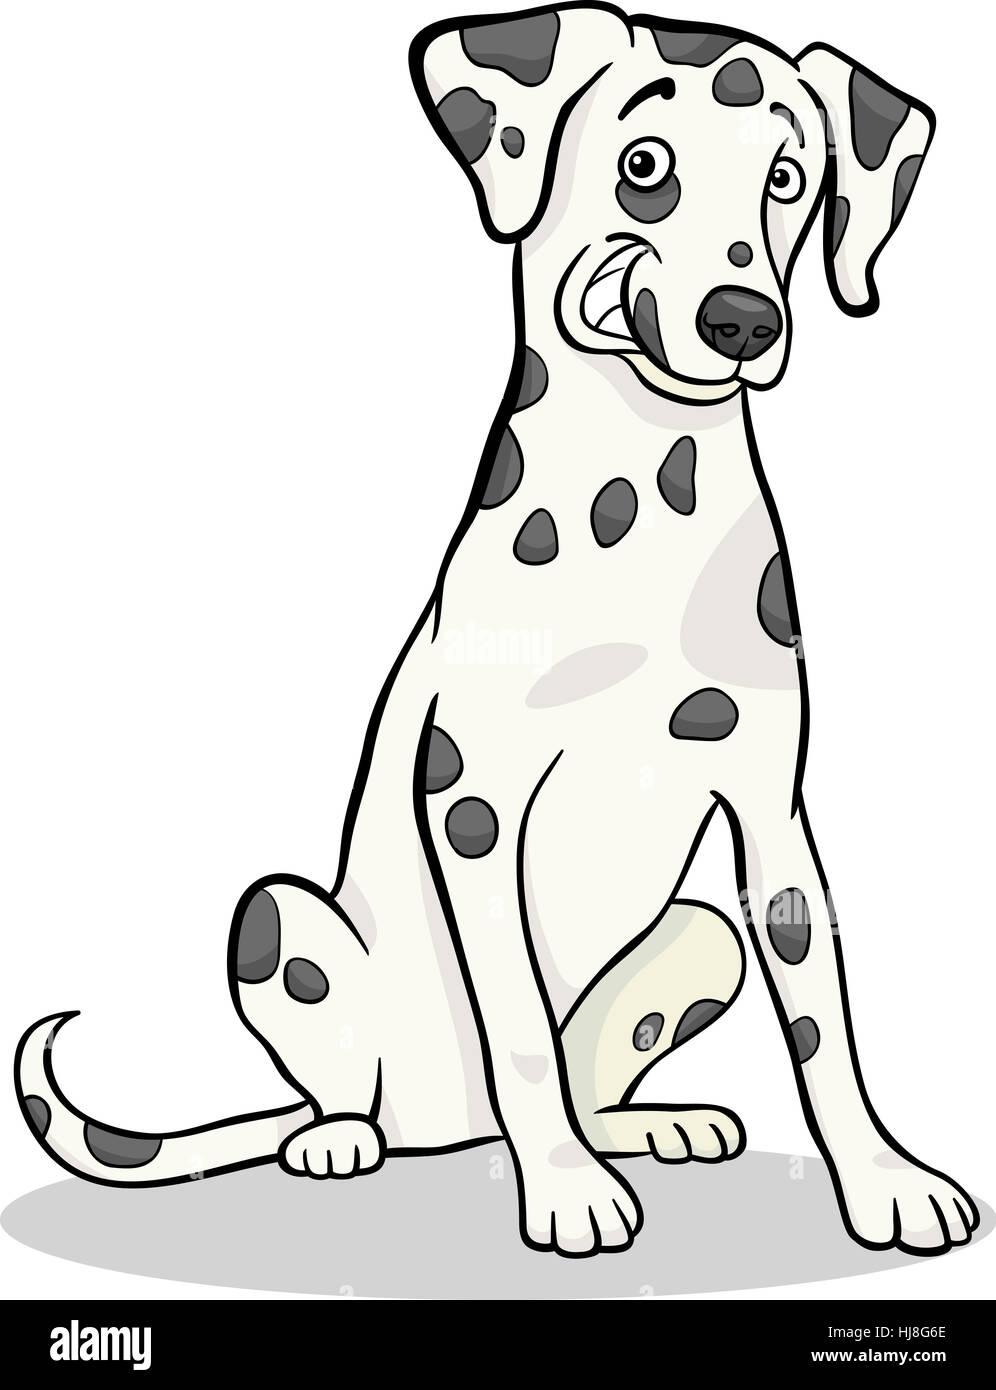 How To Draw A Cartoon Dalmatian Puppy 